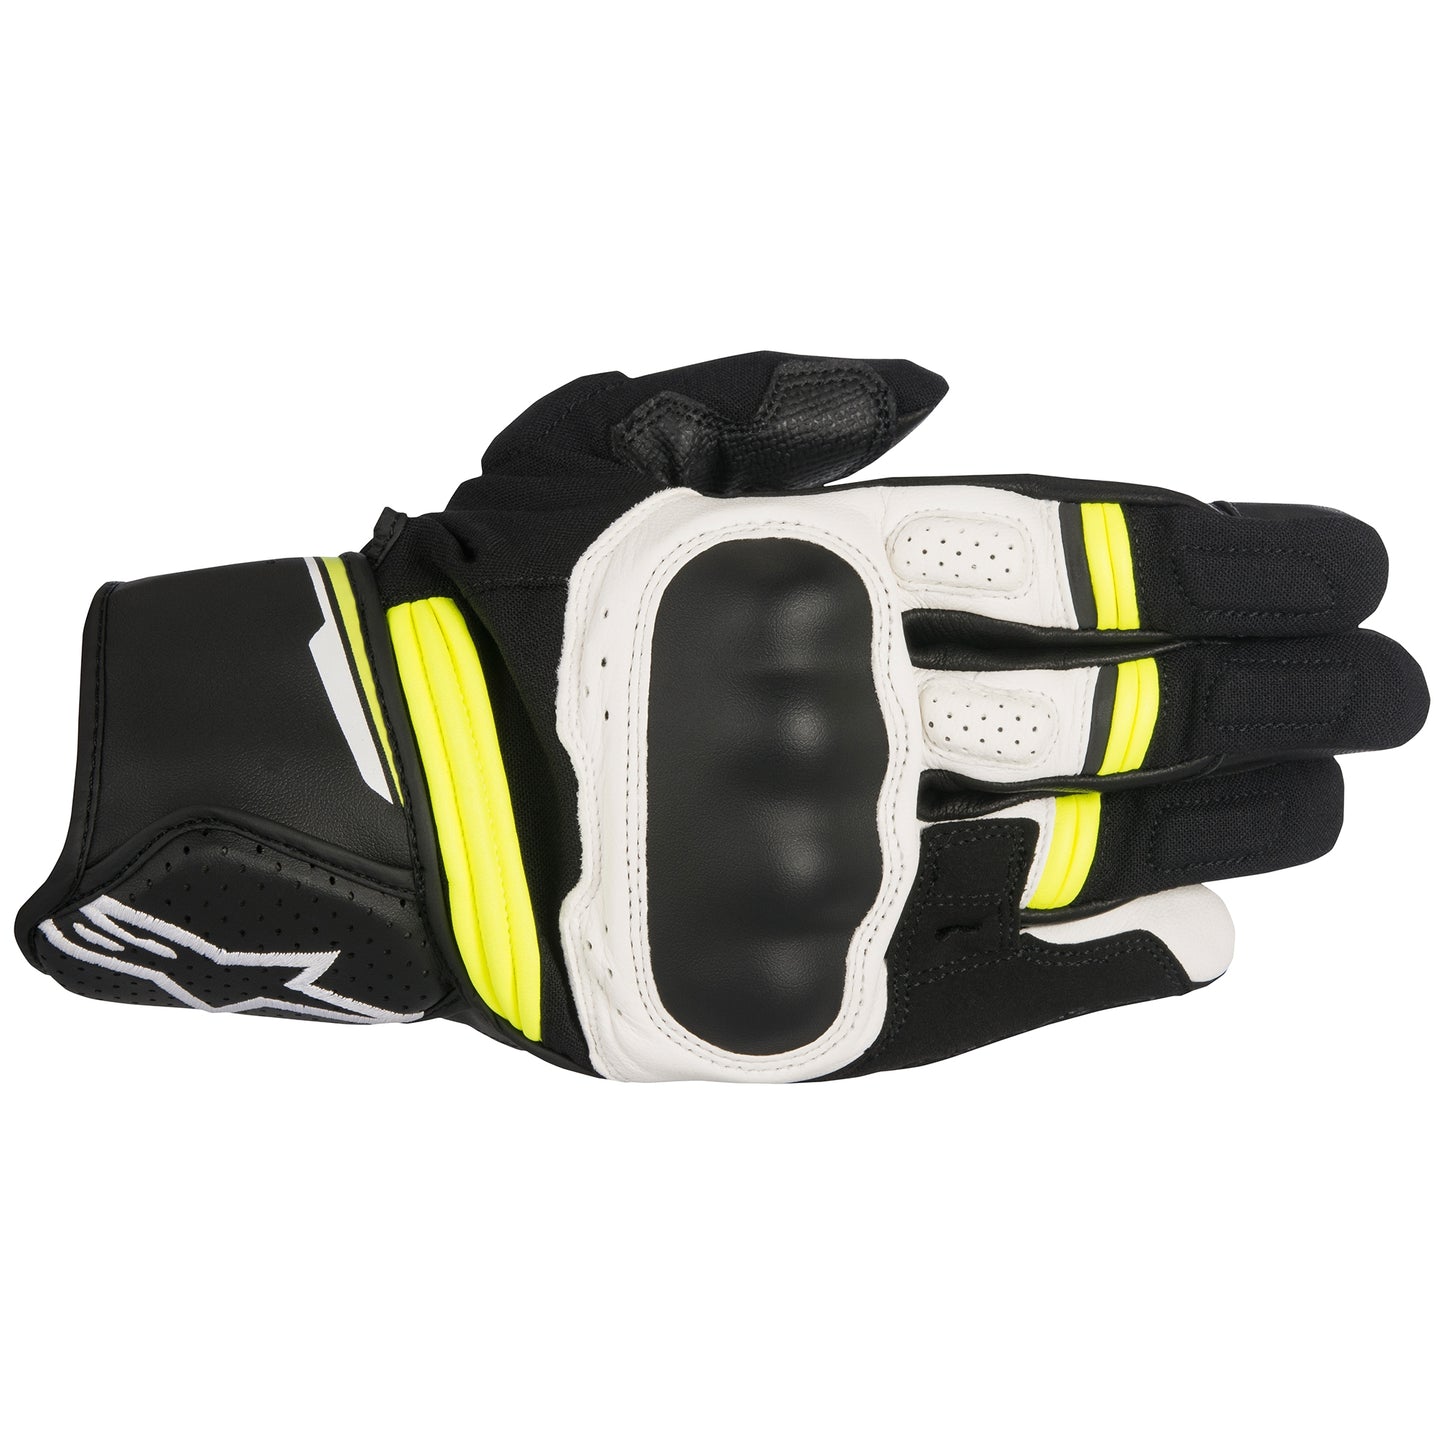 Alpinestars Booster Gloves - Black/White/Yellow